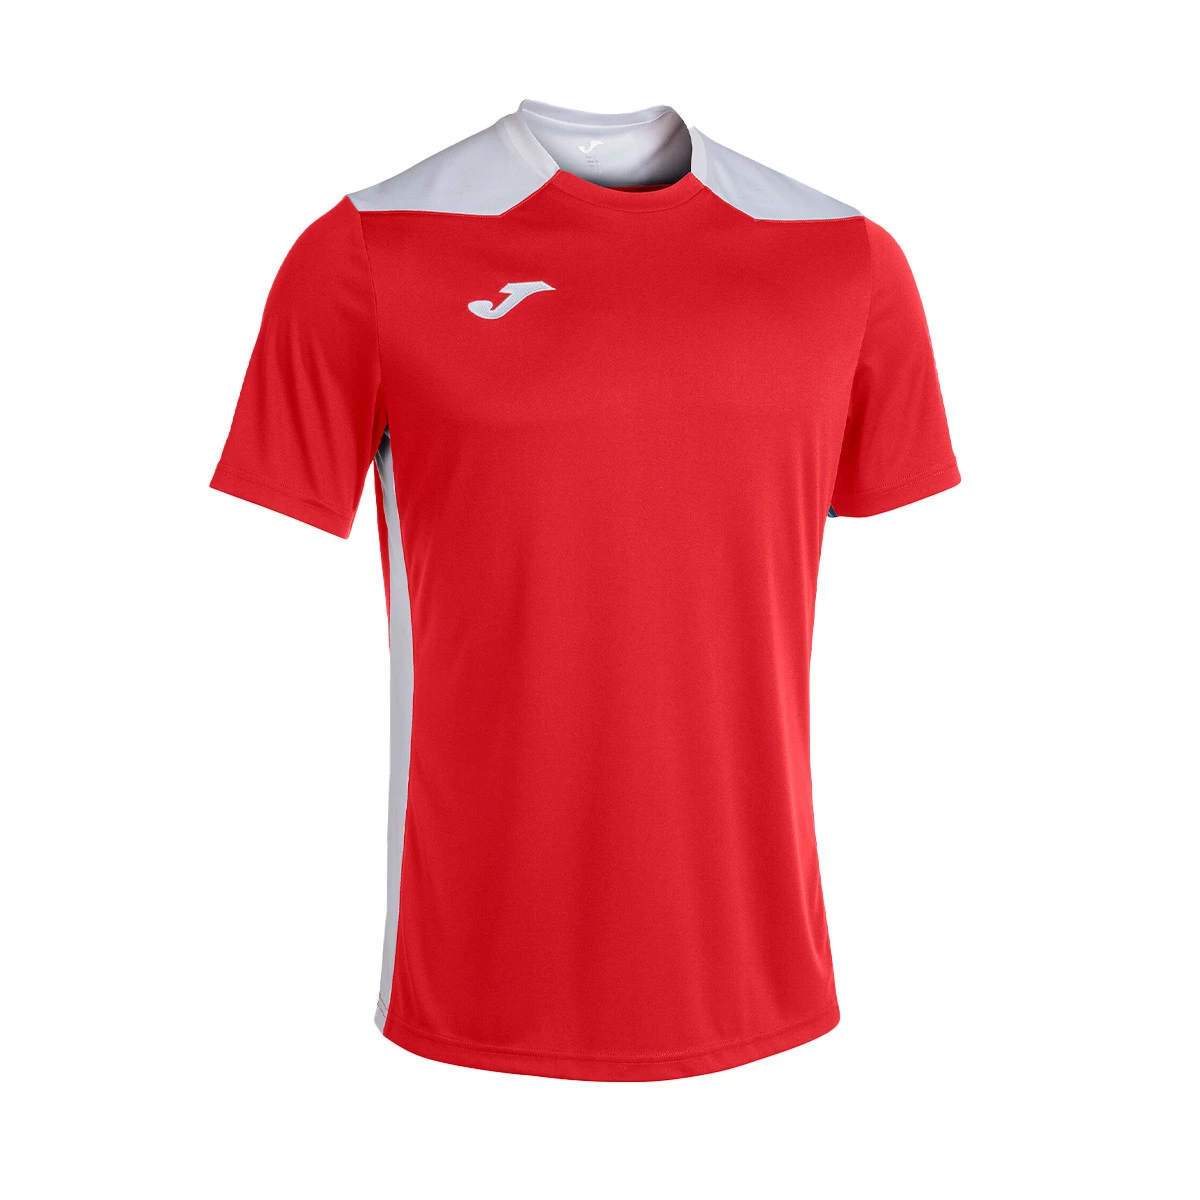 Camiseta Joma Championship VI m/c Niño Rojo-Blanco - Fútbol Emotion